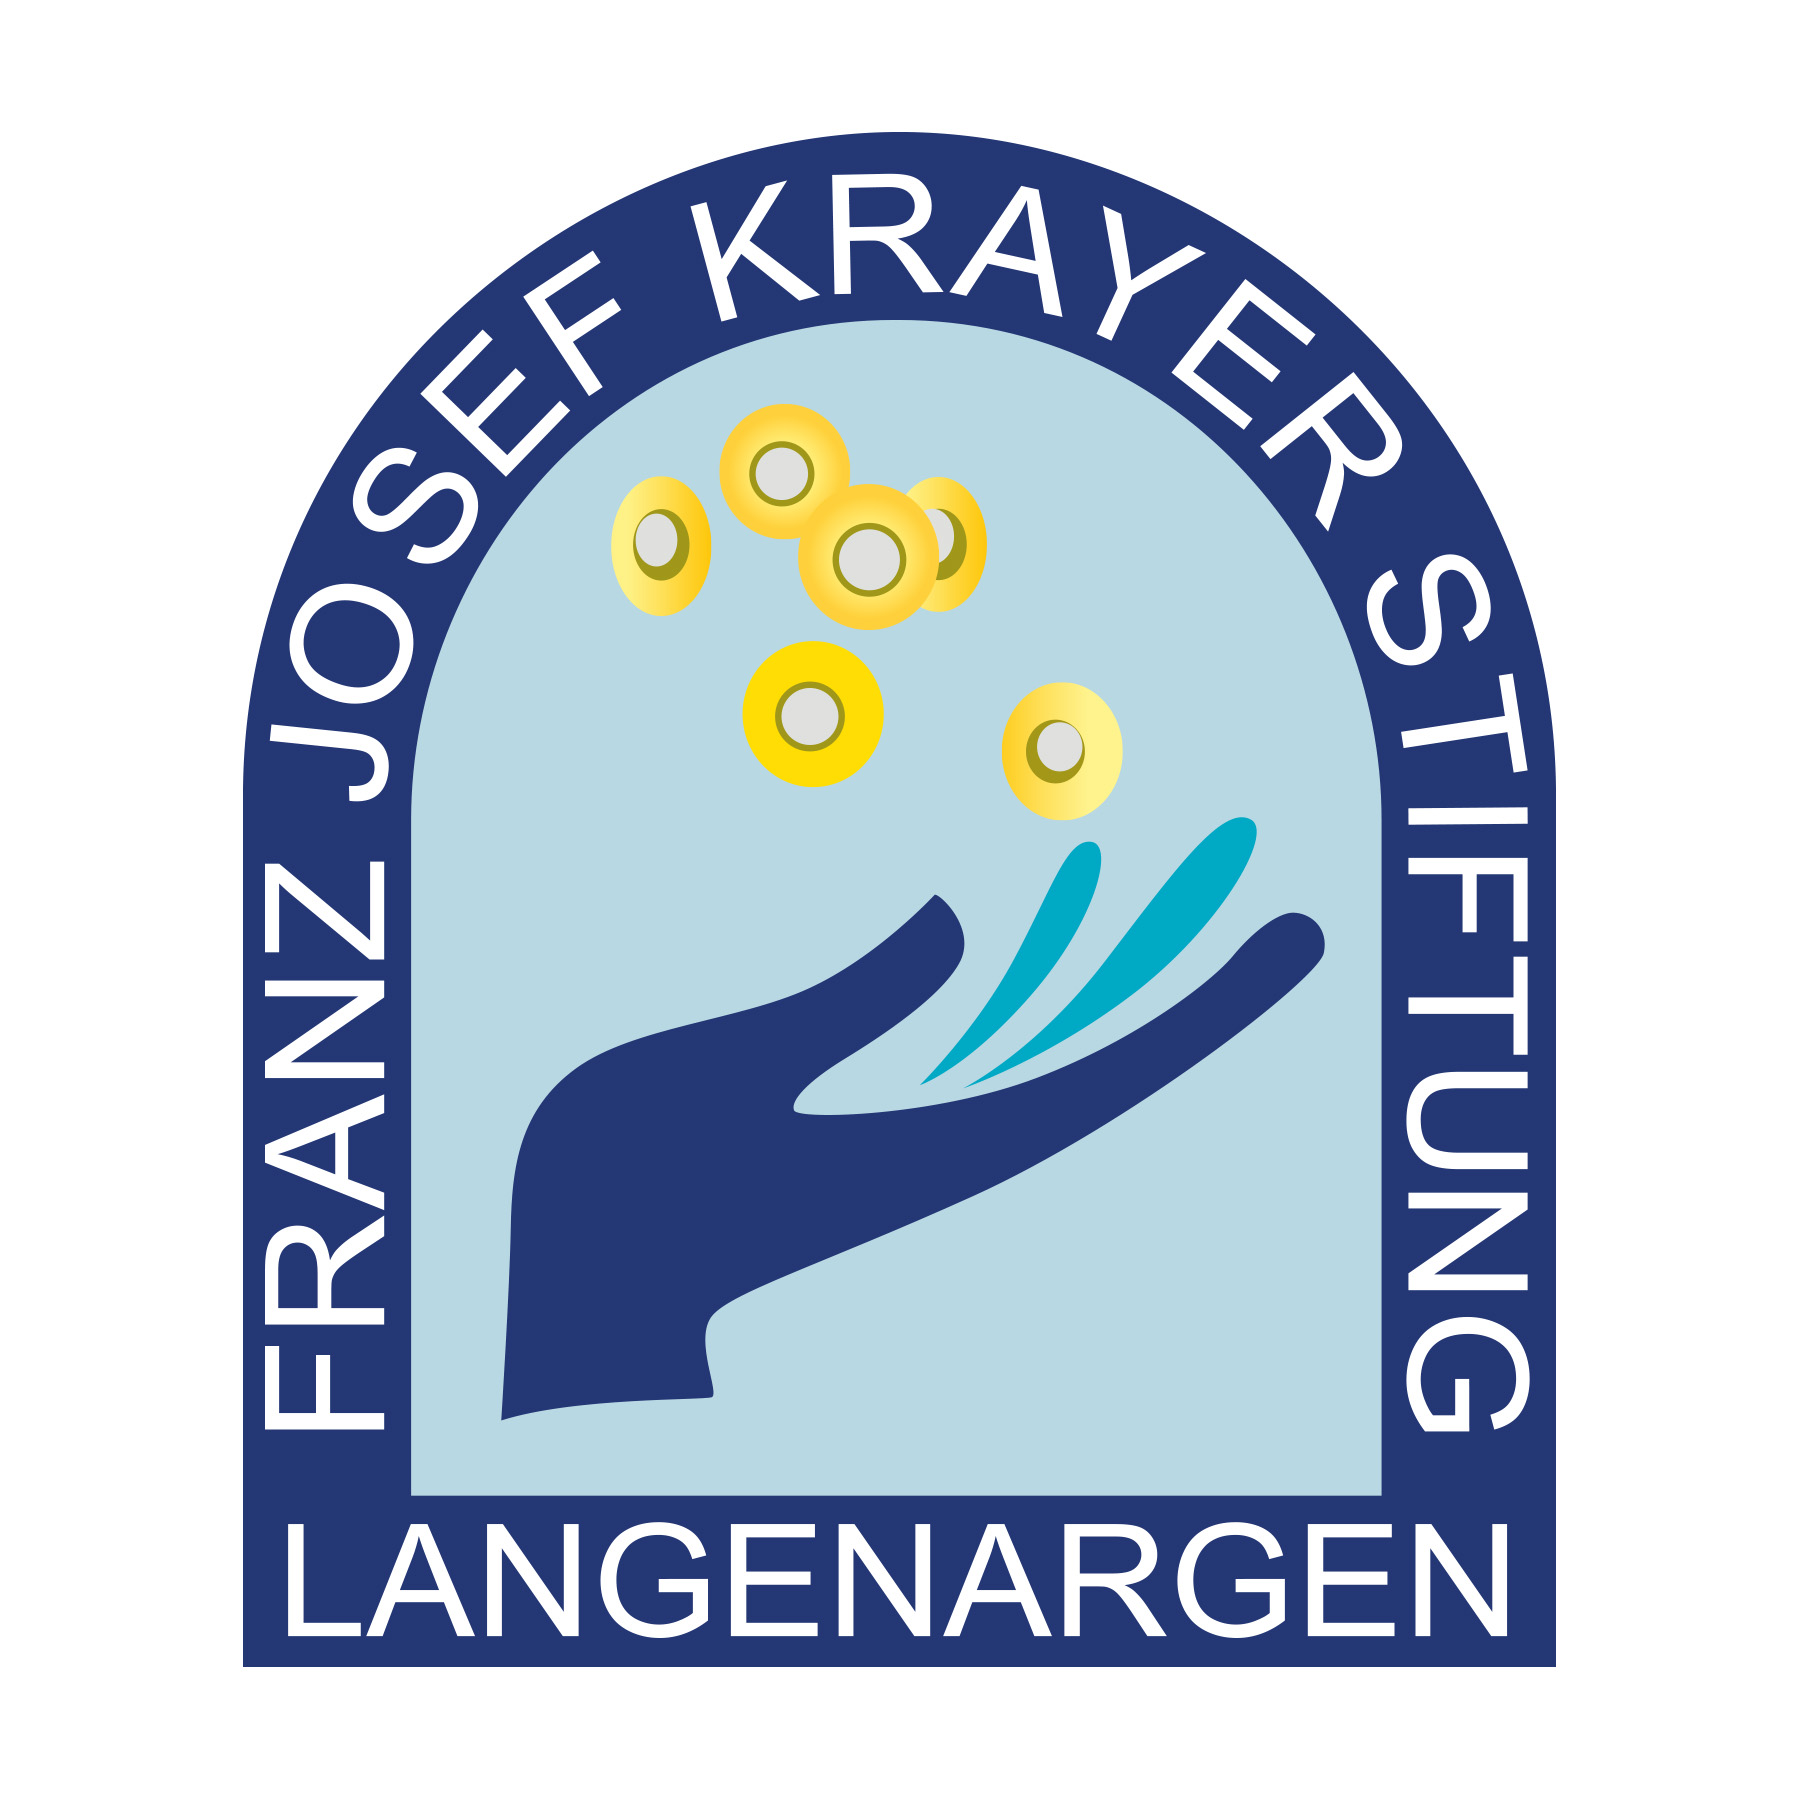 Franz Josef Krayer Stiftung